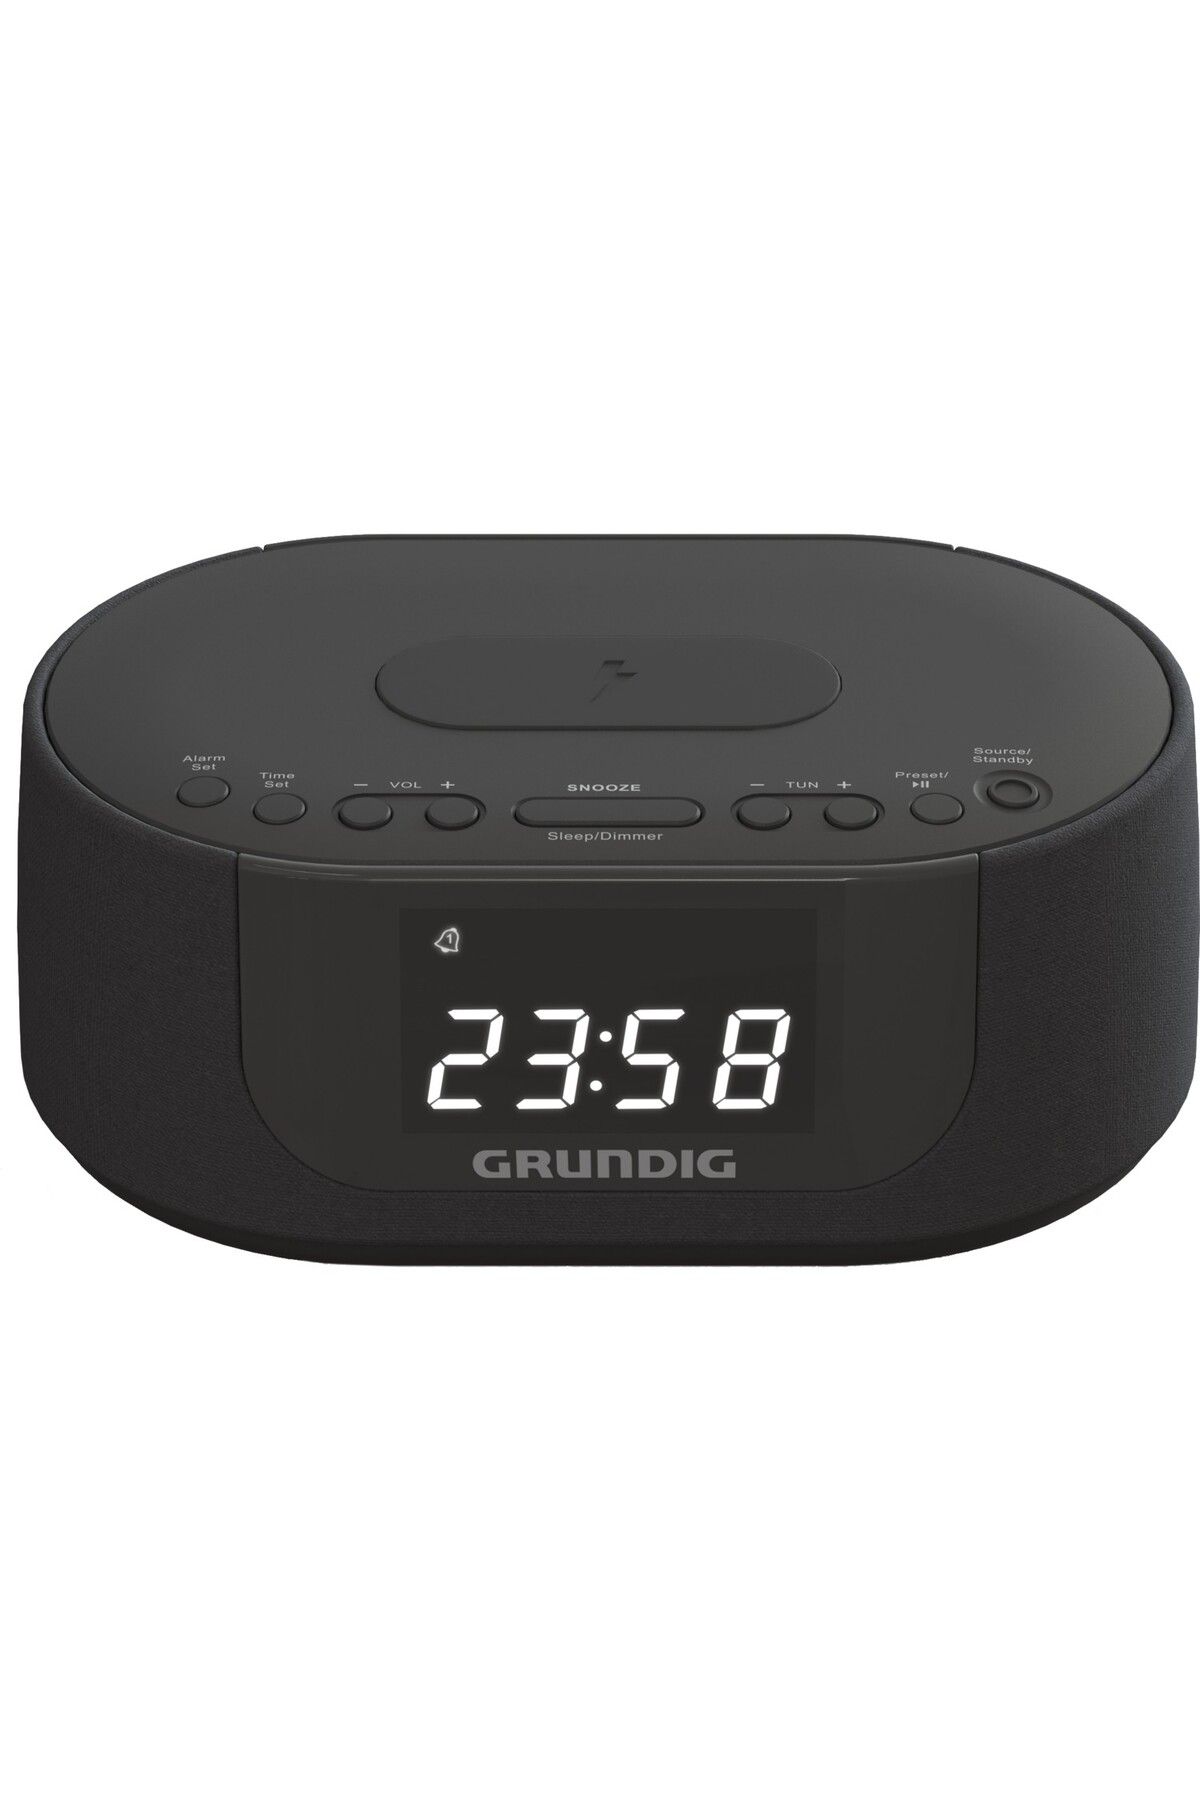 sommeow Scc 400 Alarm Saatli Radyo   Bluetooth + 4 Watt Ses Çıkışı + 5 W. Kablosuz Telefon Şarj Ciha